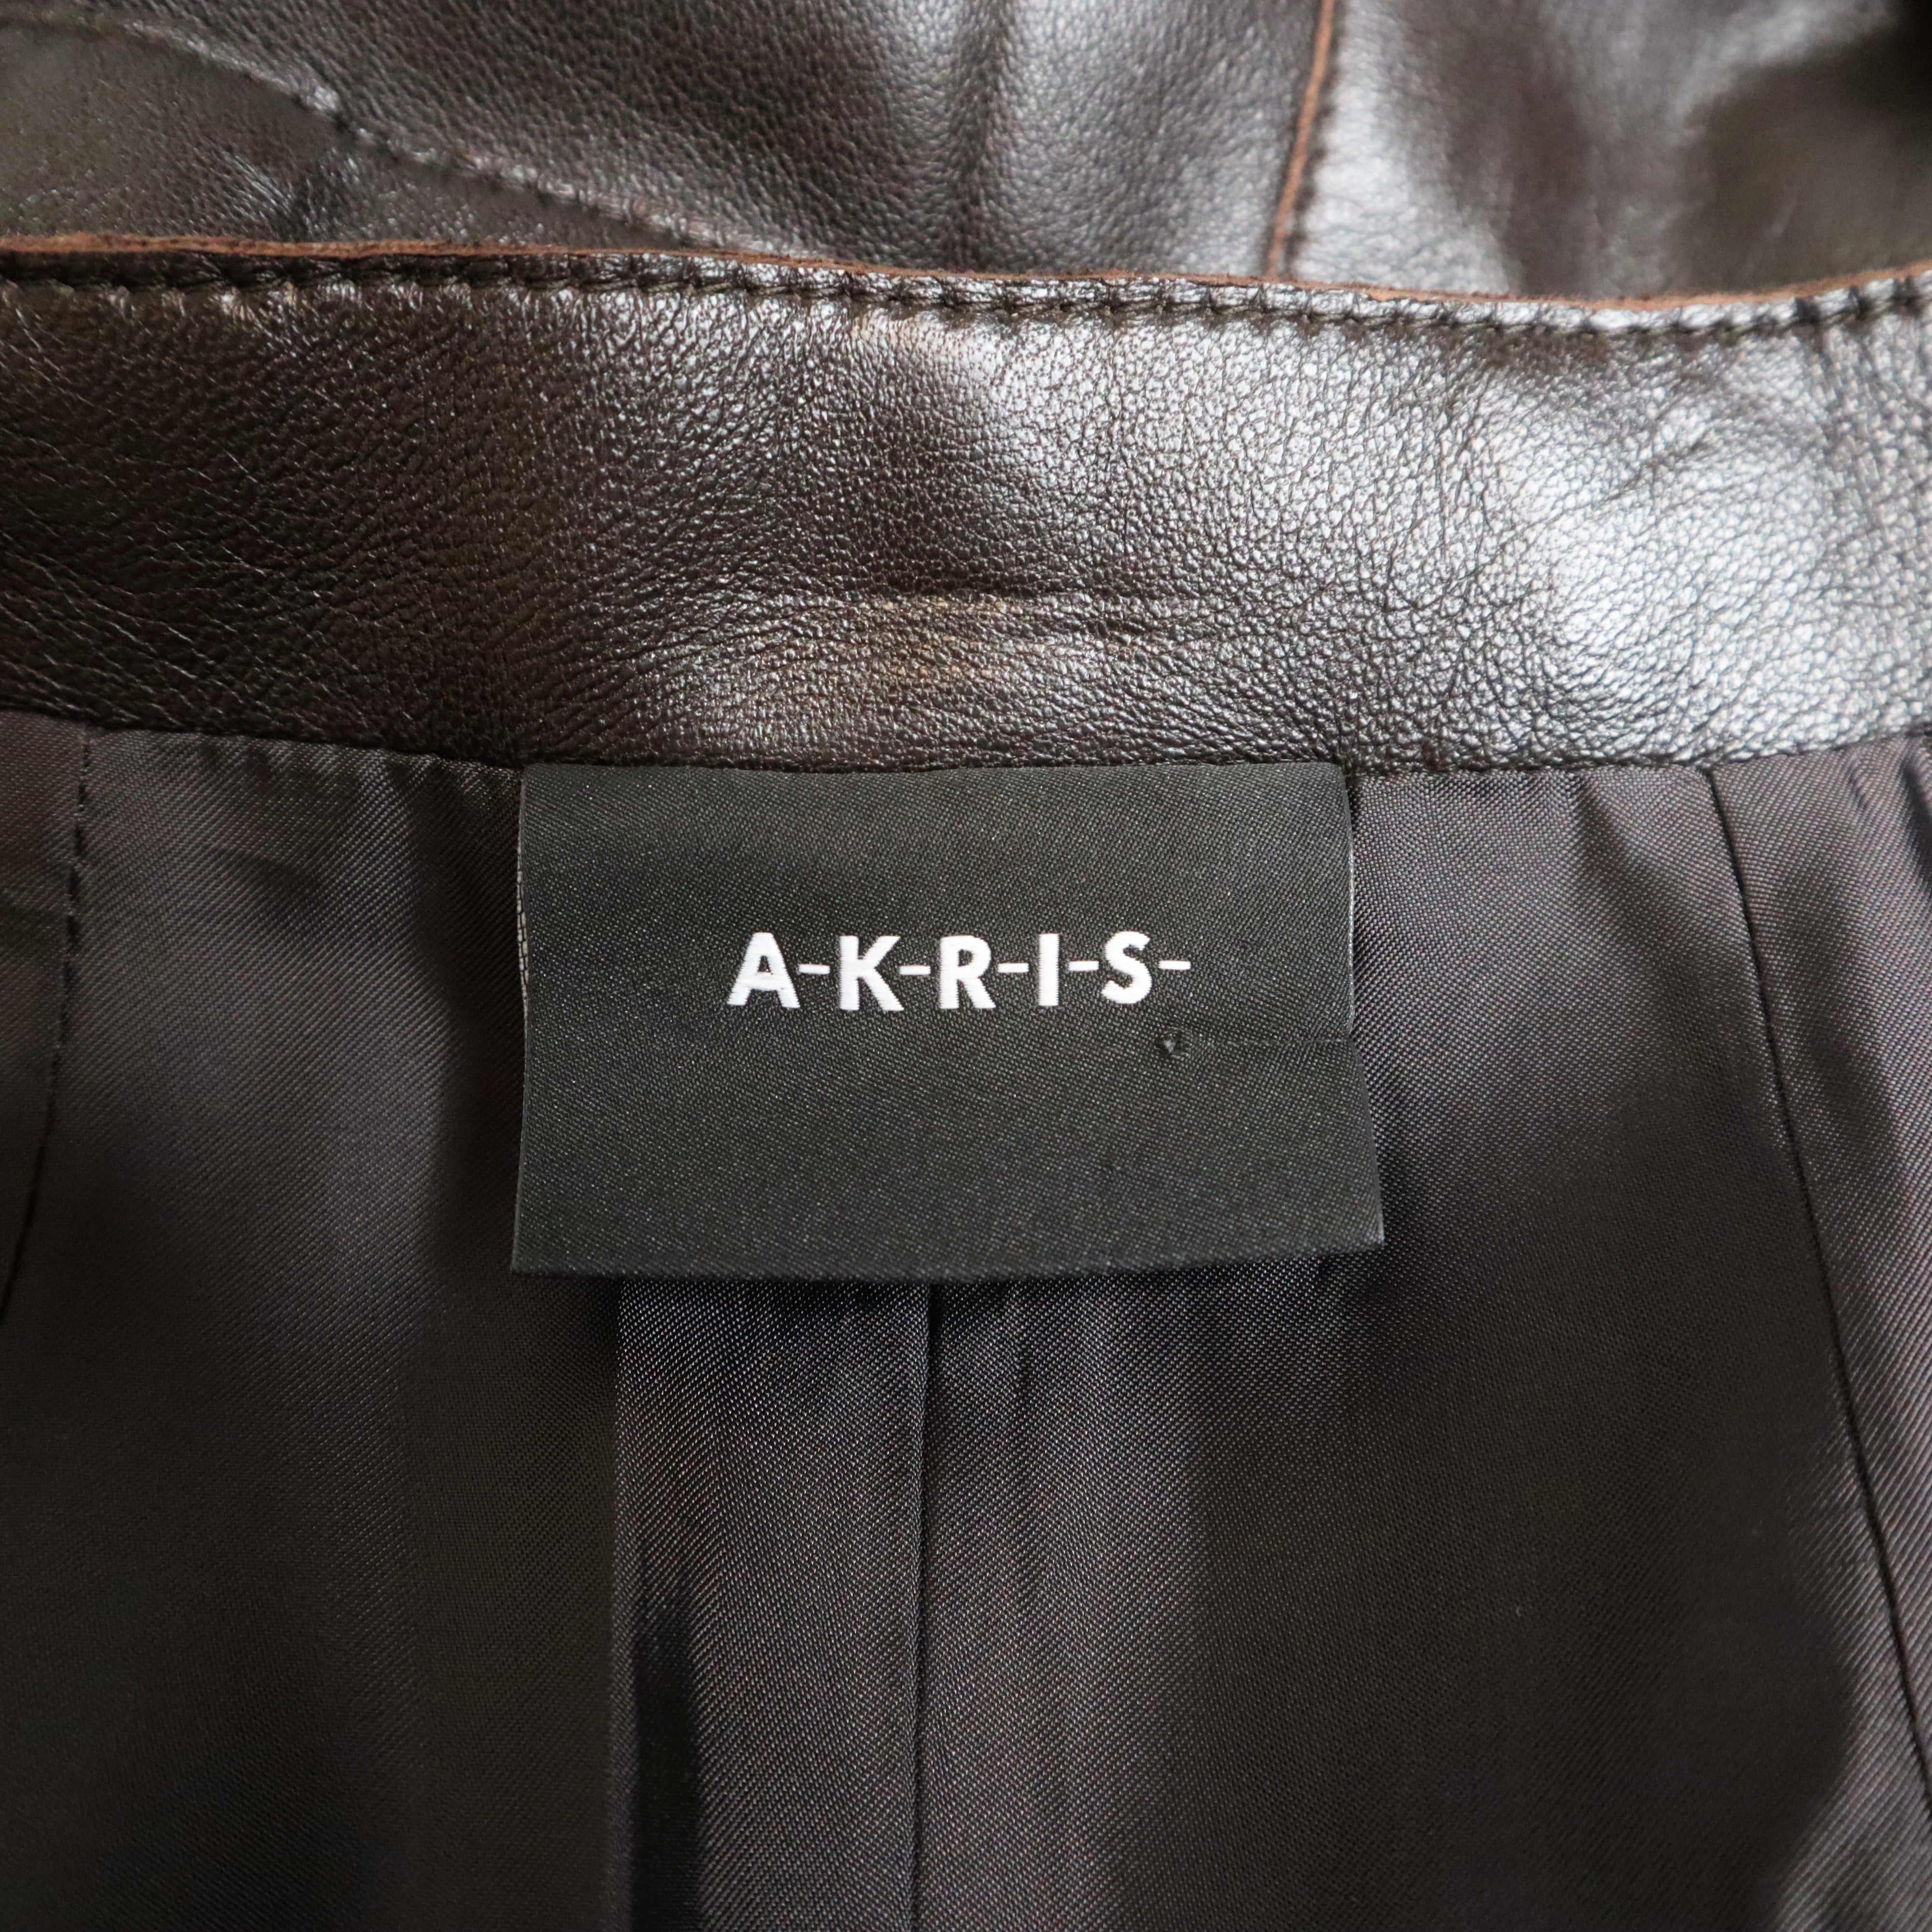 AKRIS Brown Leather Vest (XL/XXL)